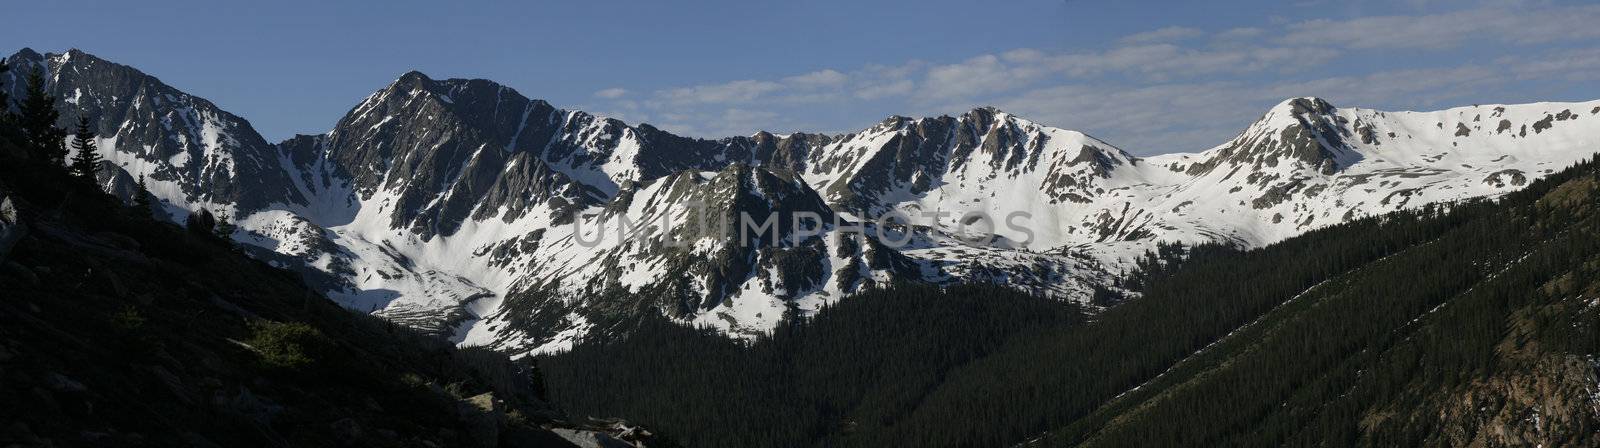 Colorado Mountains by JrnGeeraert